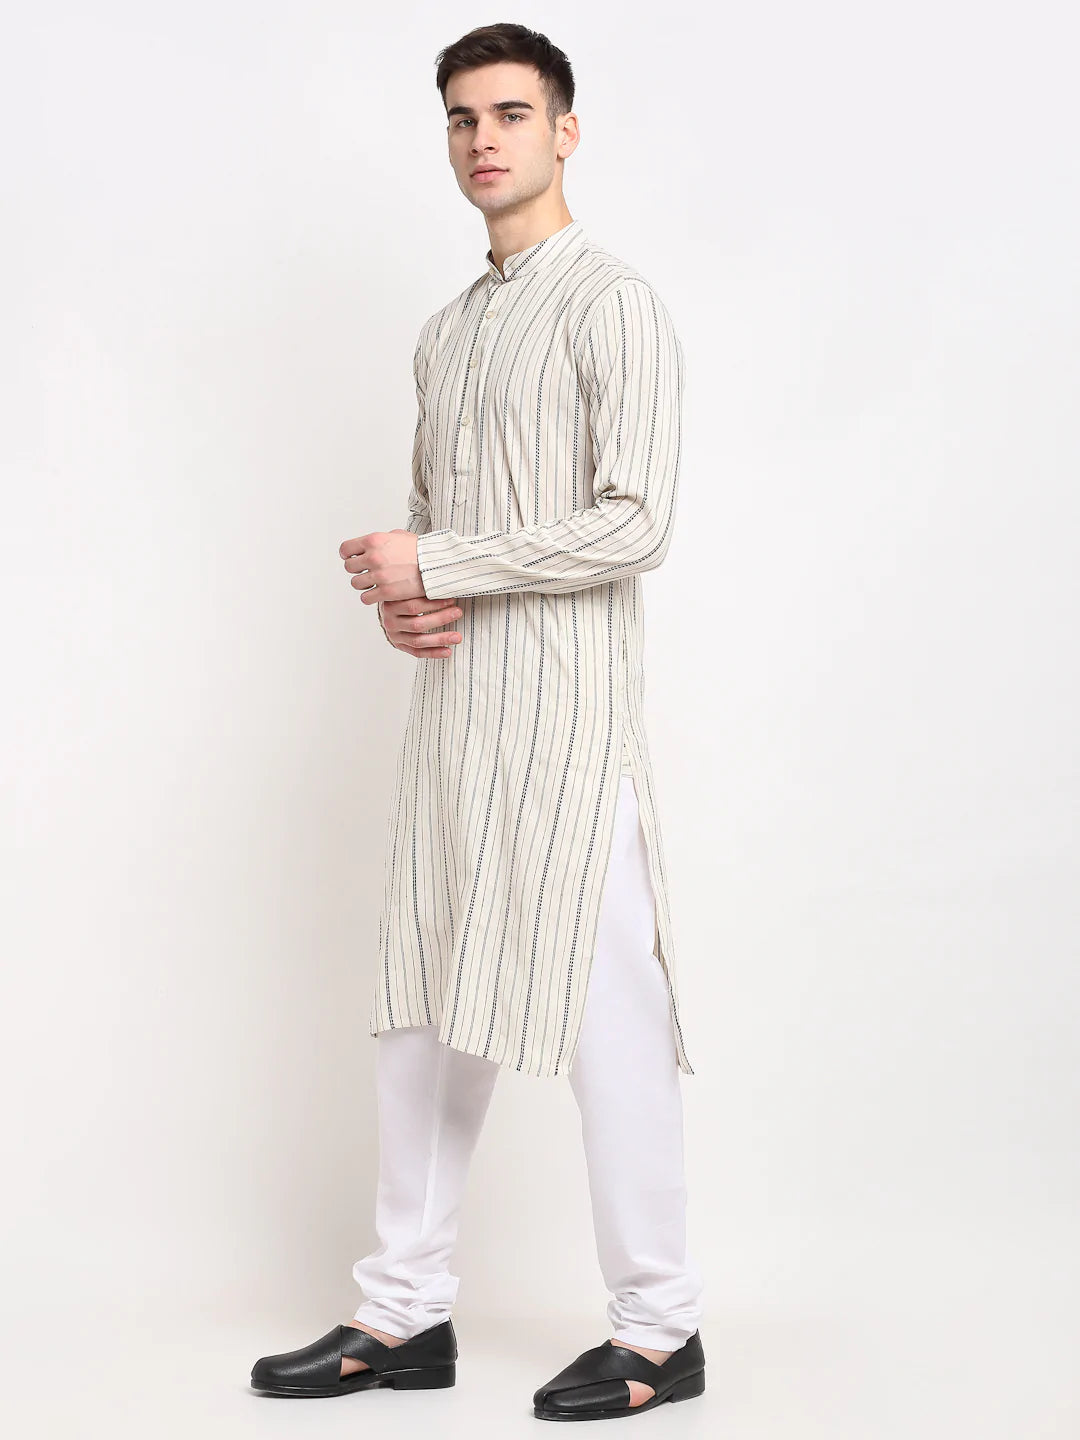 Jompers Men's Cream Cotton Striped Kurta Payjama Sets ( JOKP 643 Cream )